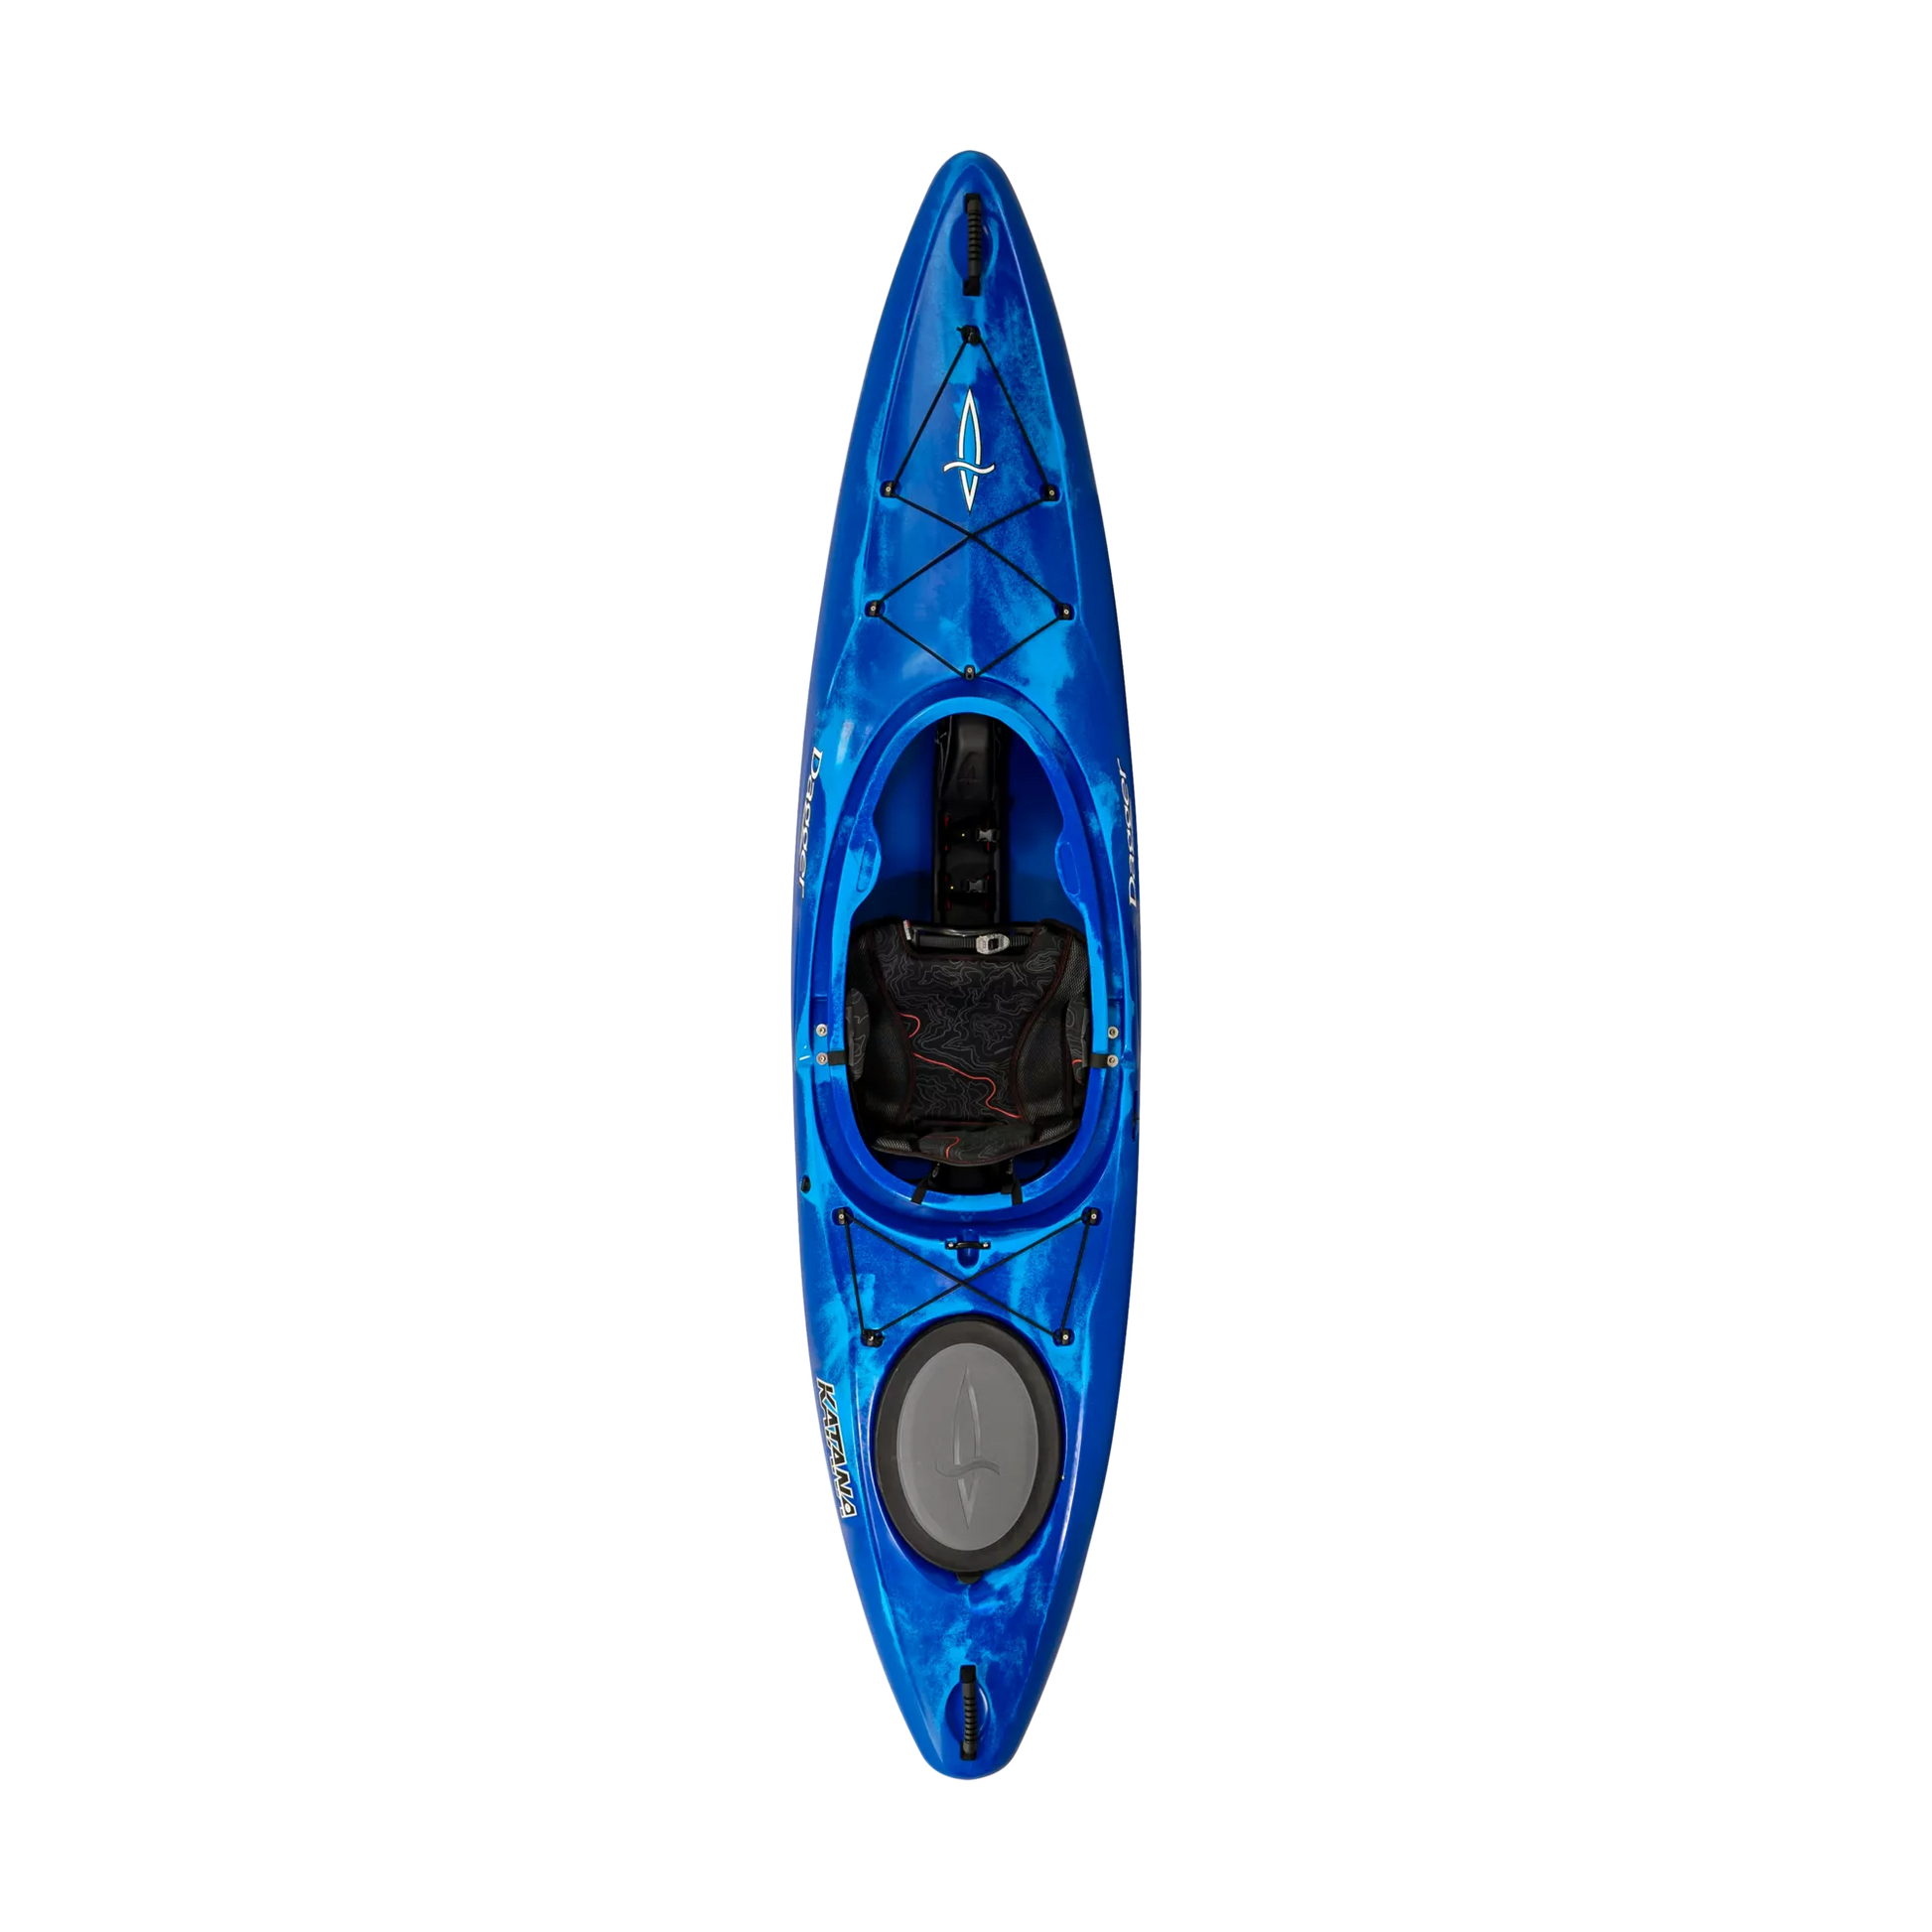 Dagger Katana whitewater kayak with paddle on a black background.